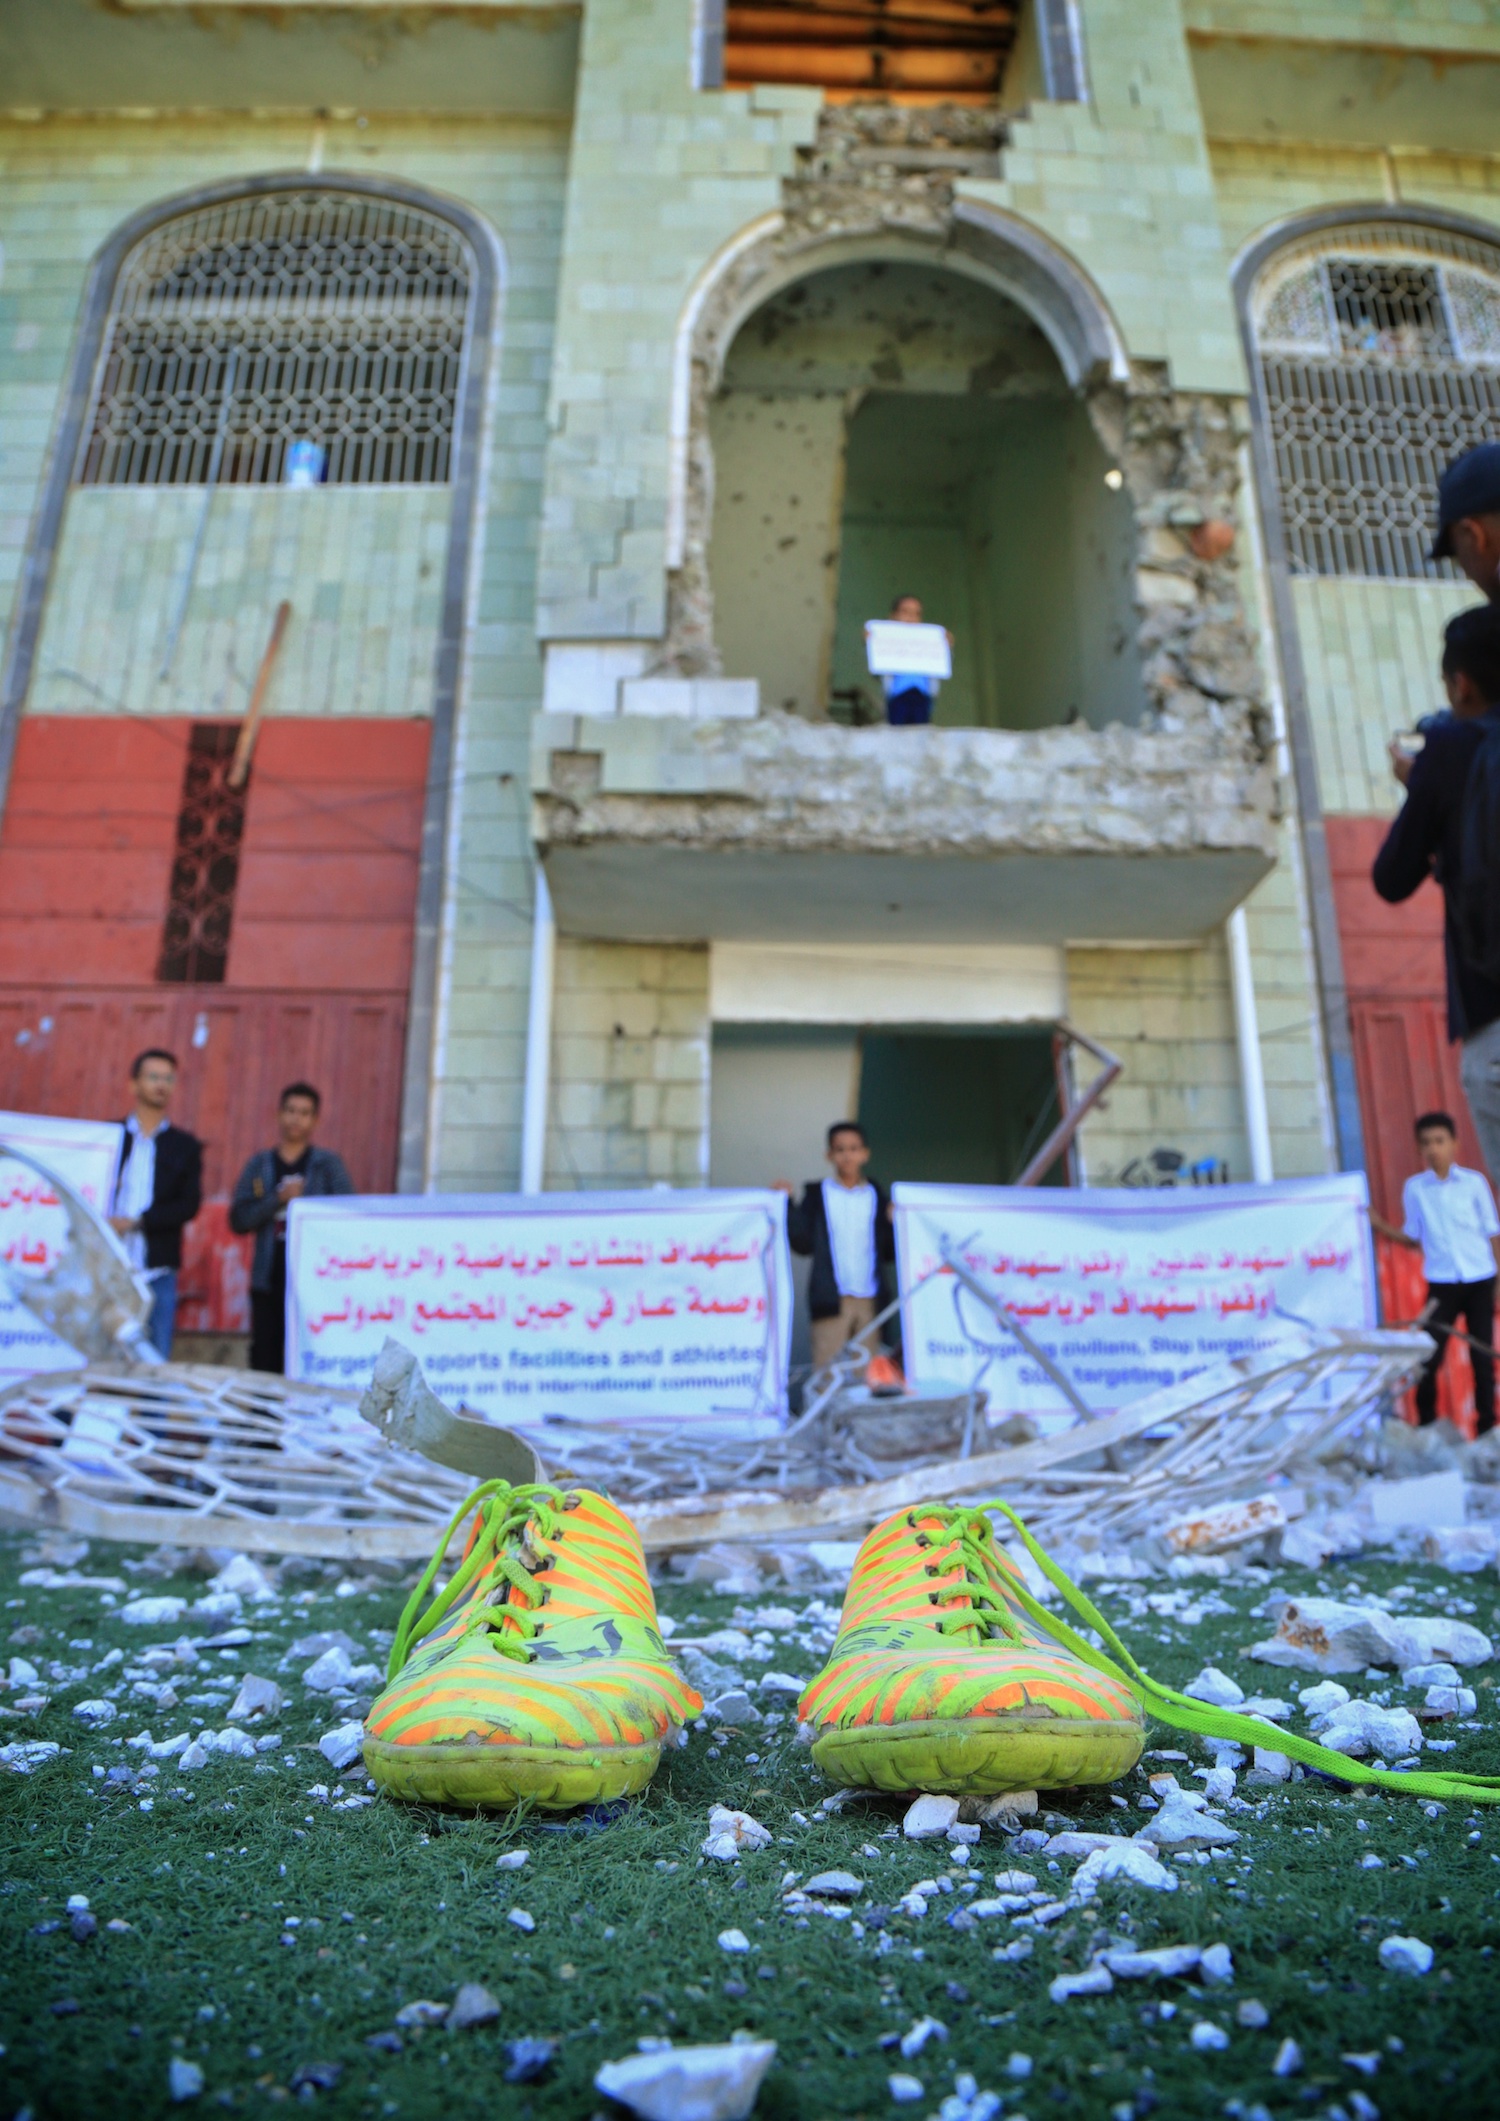 Yemen Taiz Raimi shoes football stadium bombing protest MEE Khalid Al-Banna